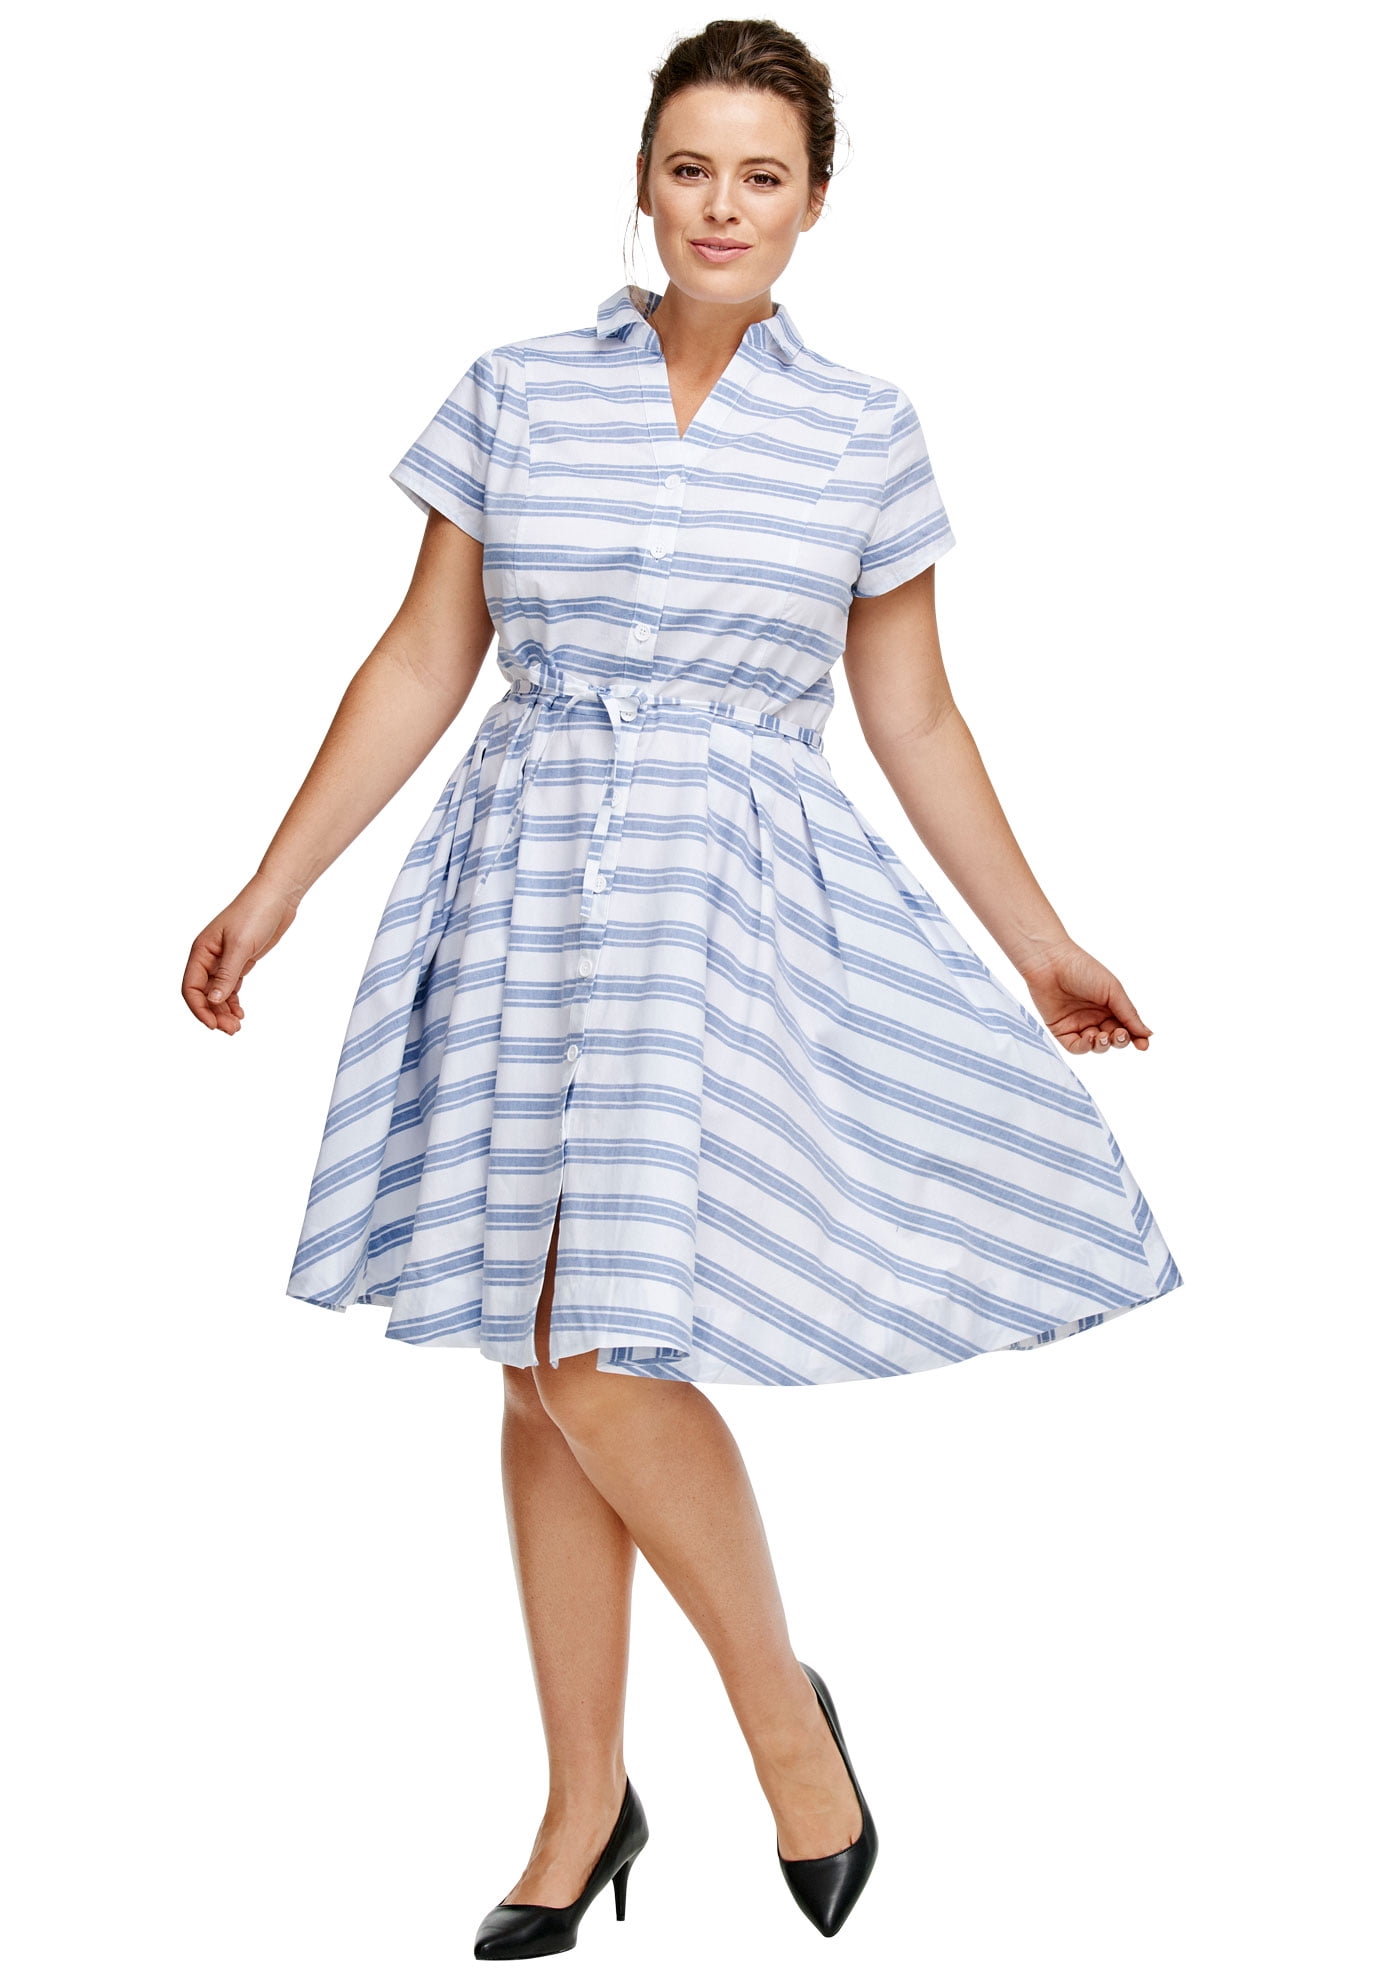 Ellos - Ellos Plus Size Sandy Shirtwaist Dress - Walmart.com